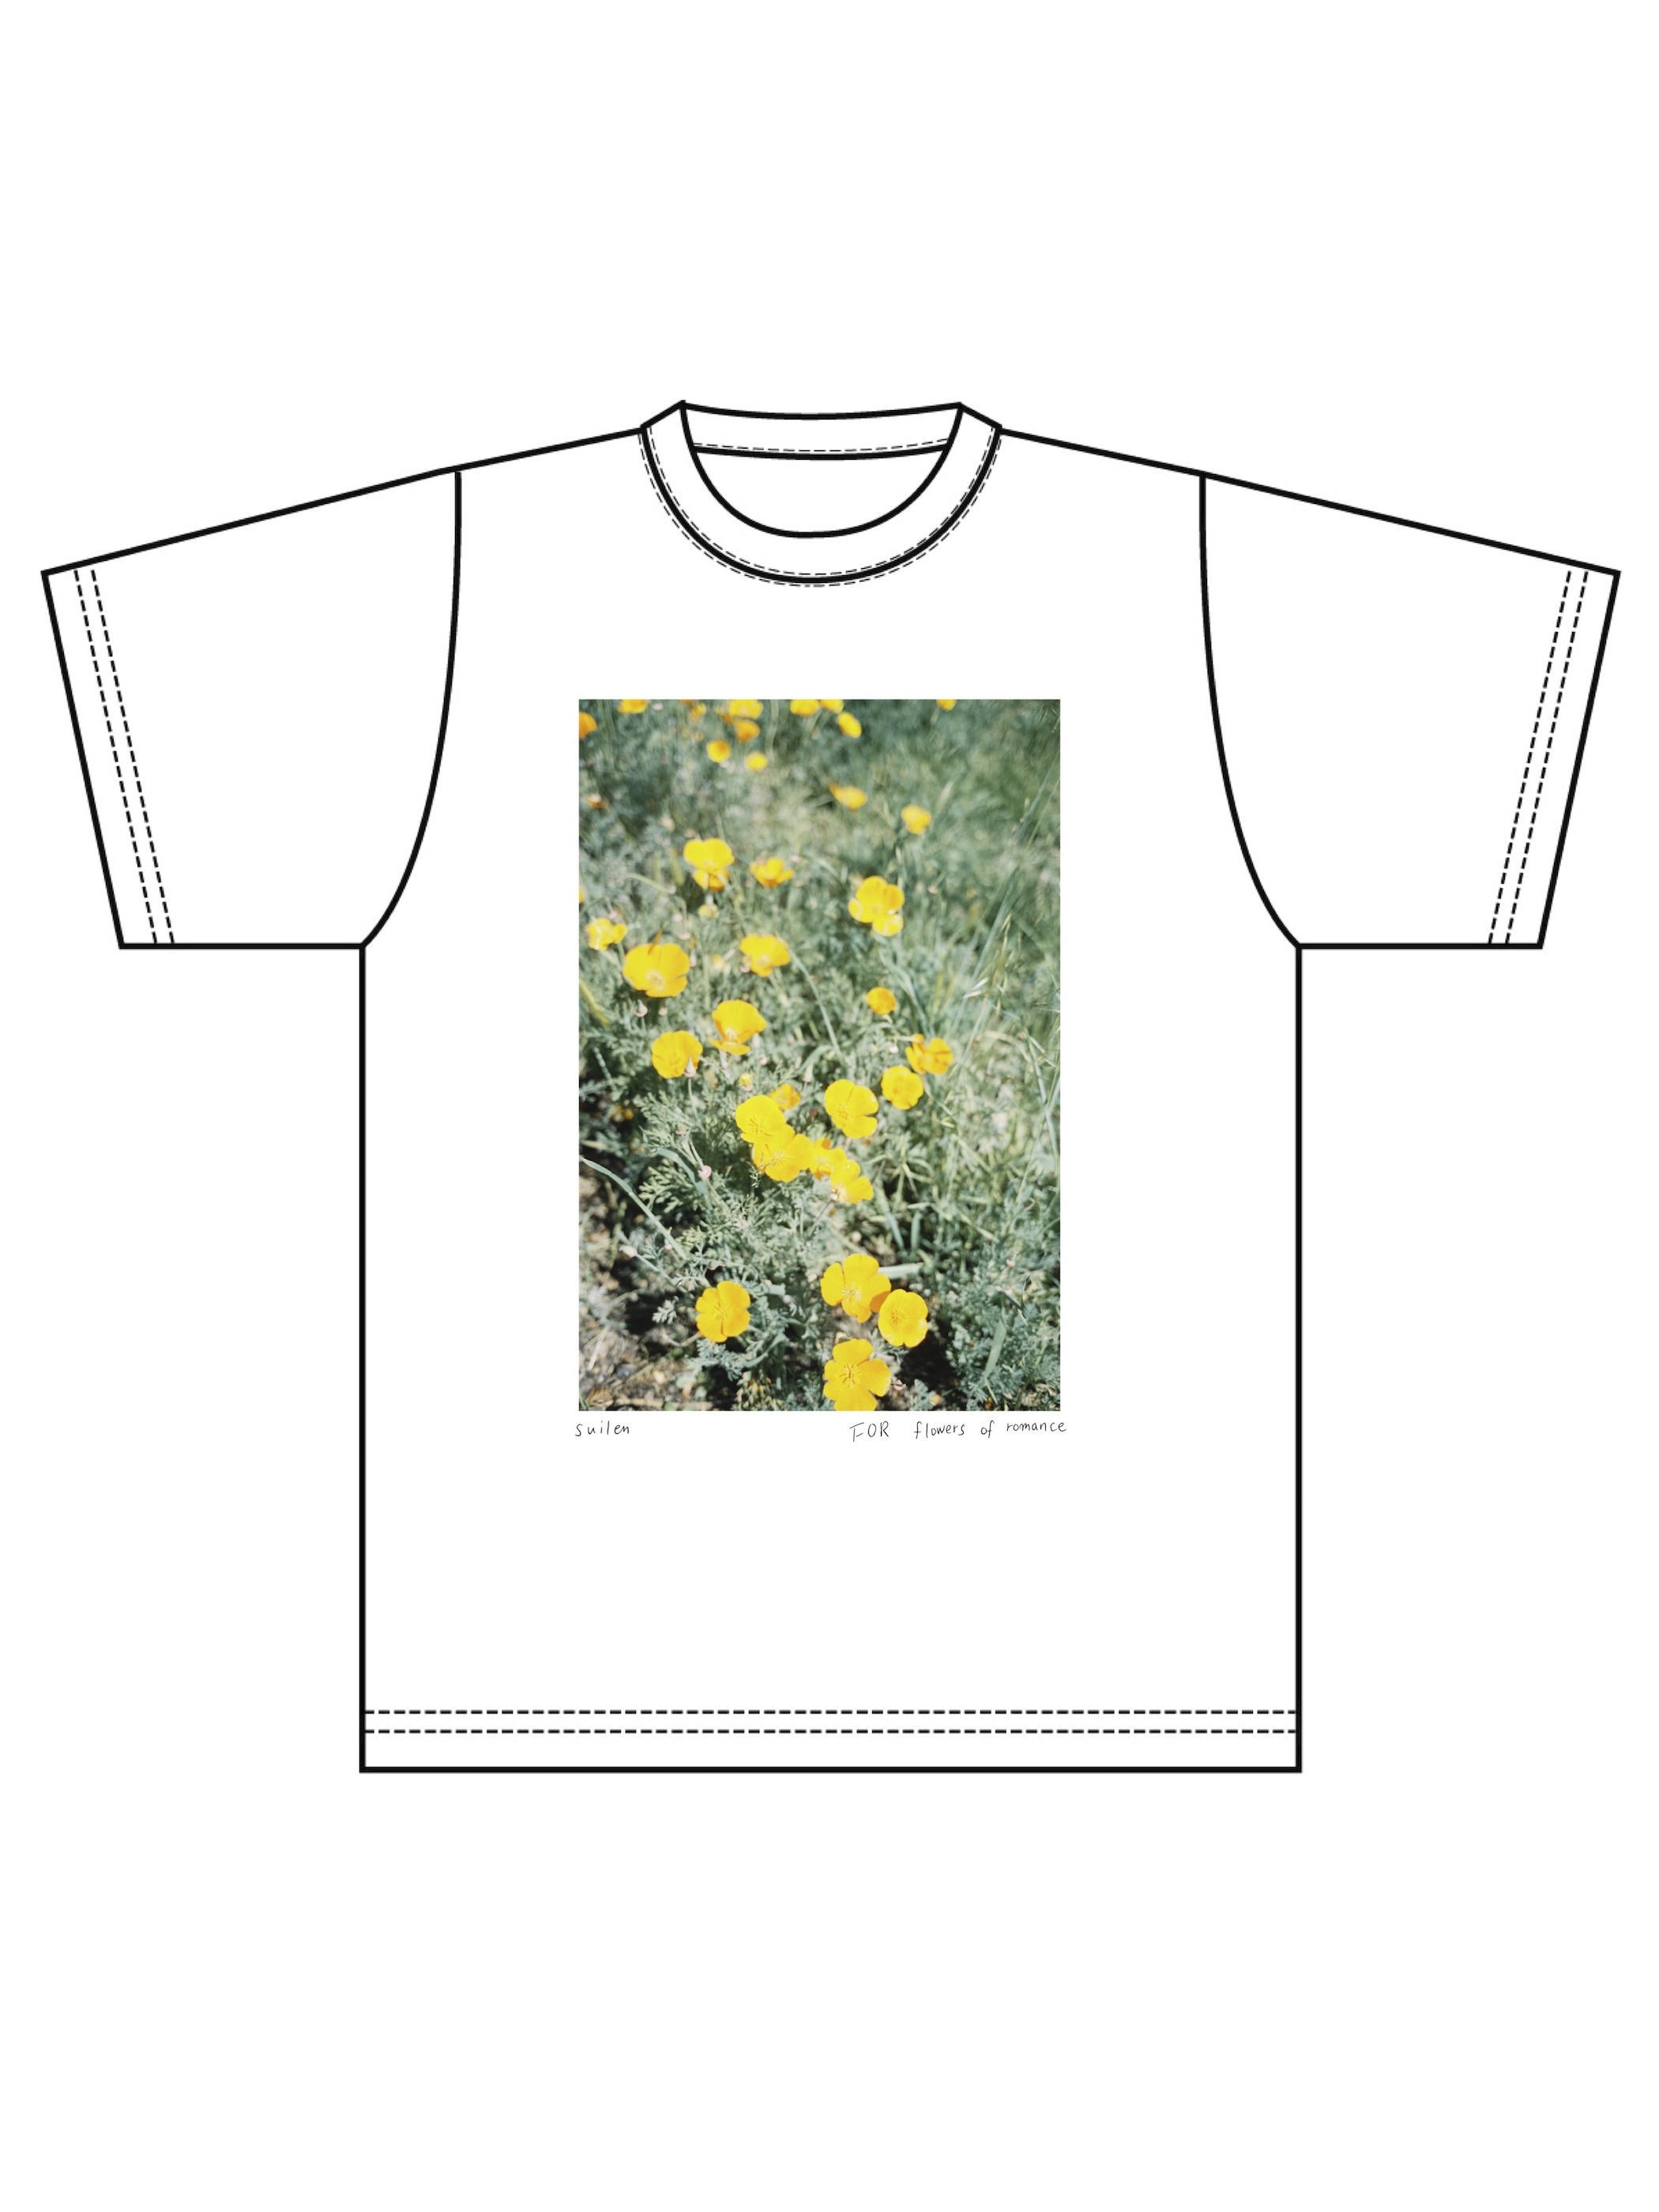 suilen T-shirt col.yellow flowers